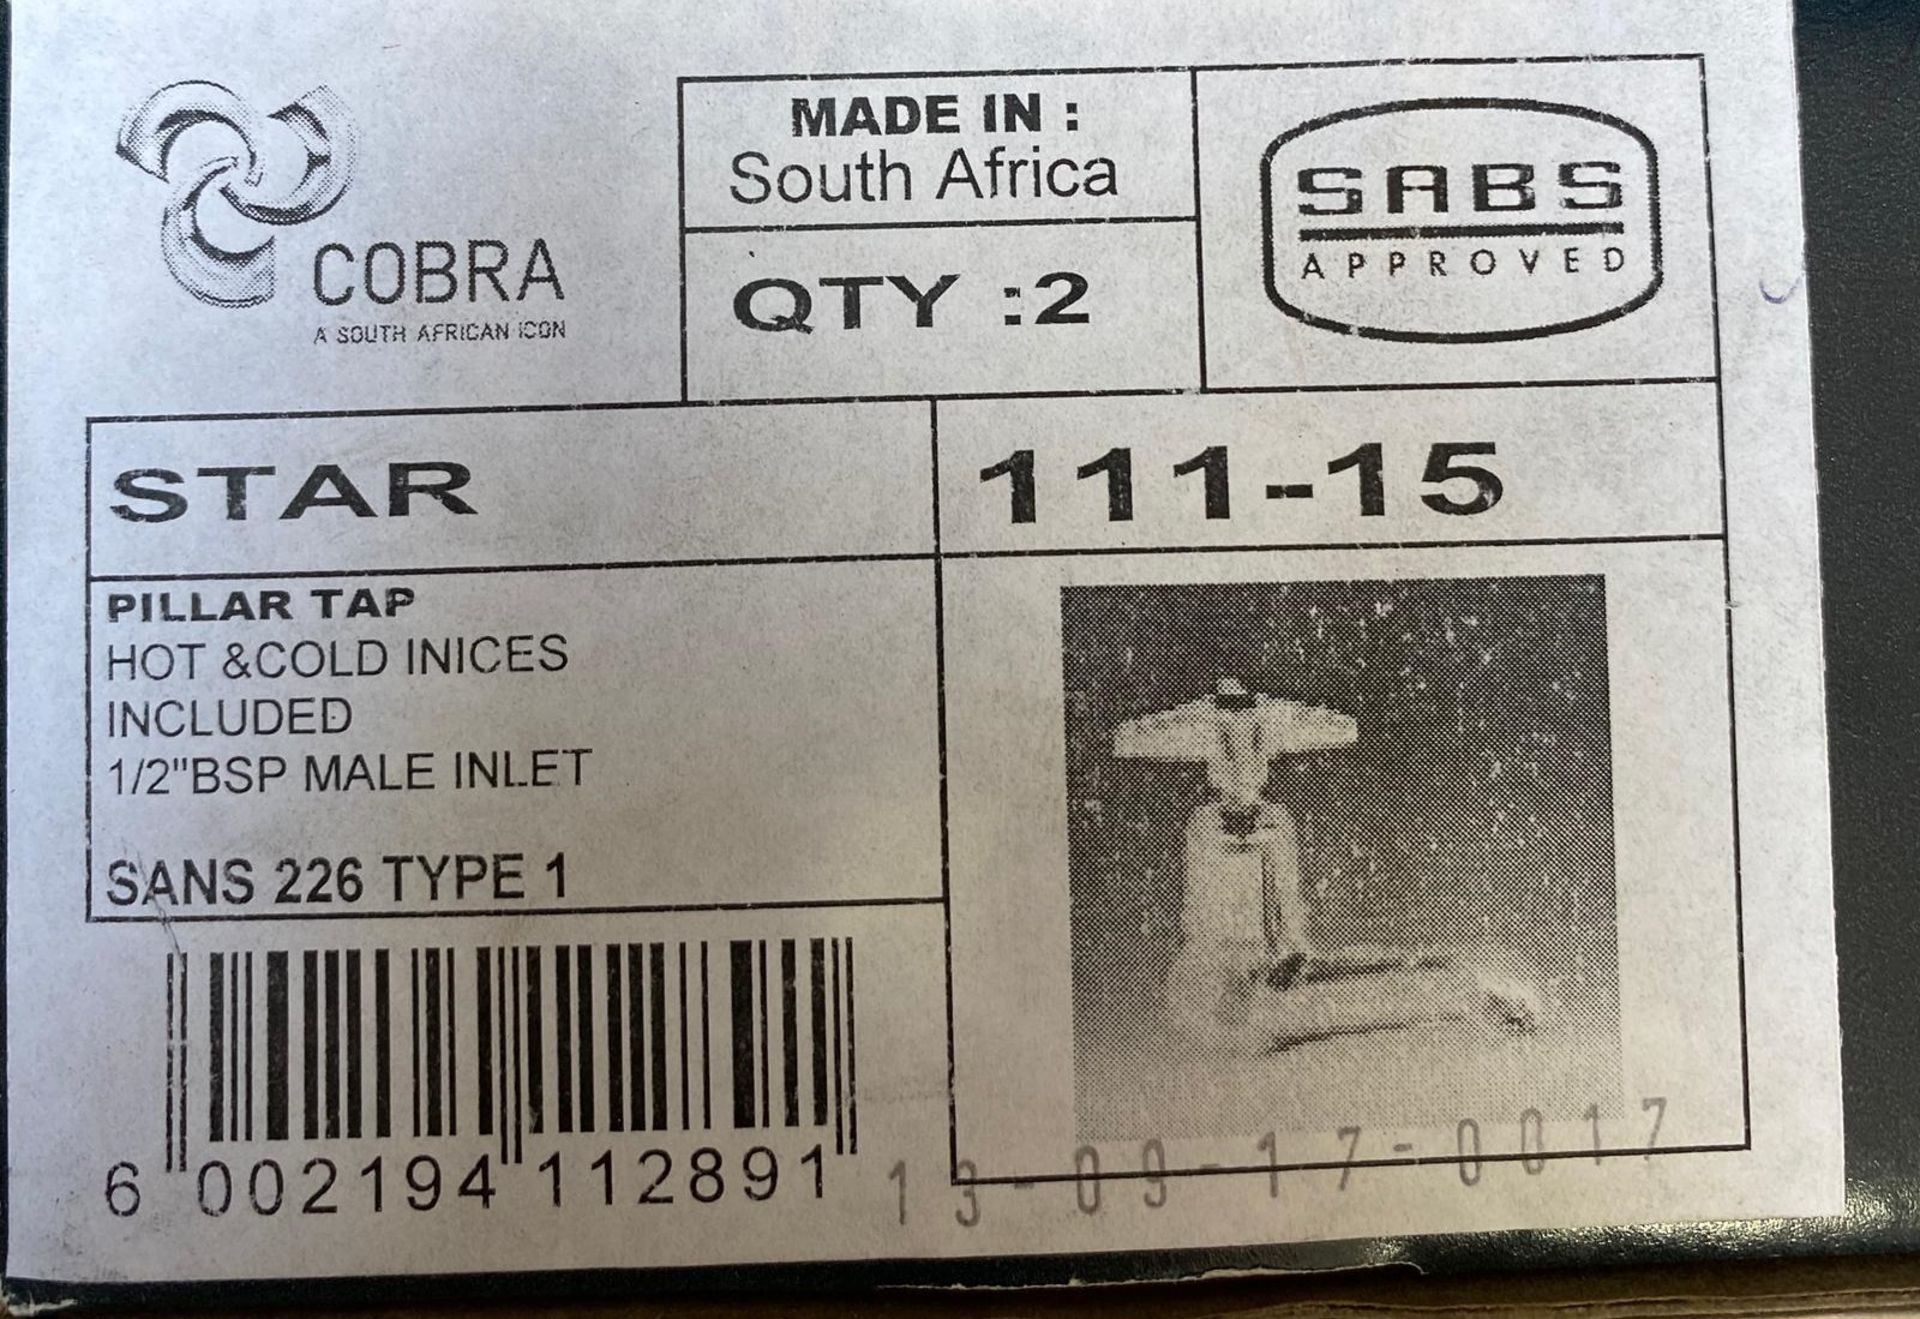 1 x Cobra Pillar Taps - Product Code: 111-15 - New Boxed Stock - Location: Altrincham WA14 - - Image 3 of 5